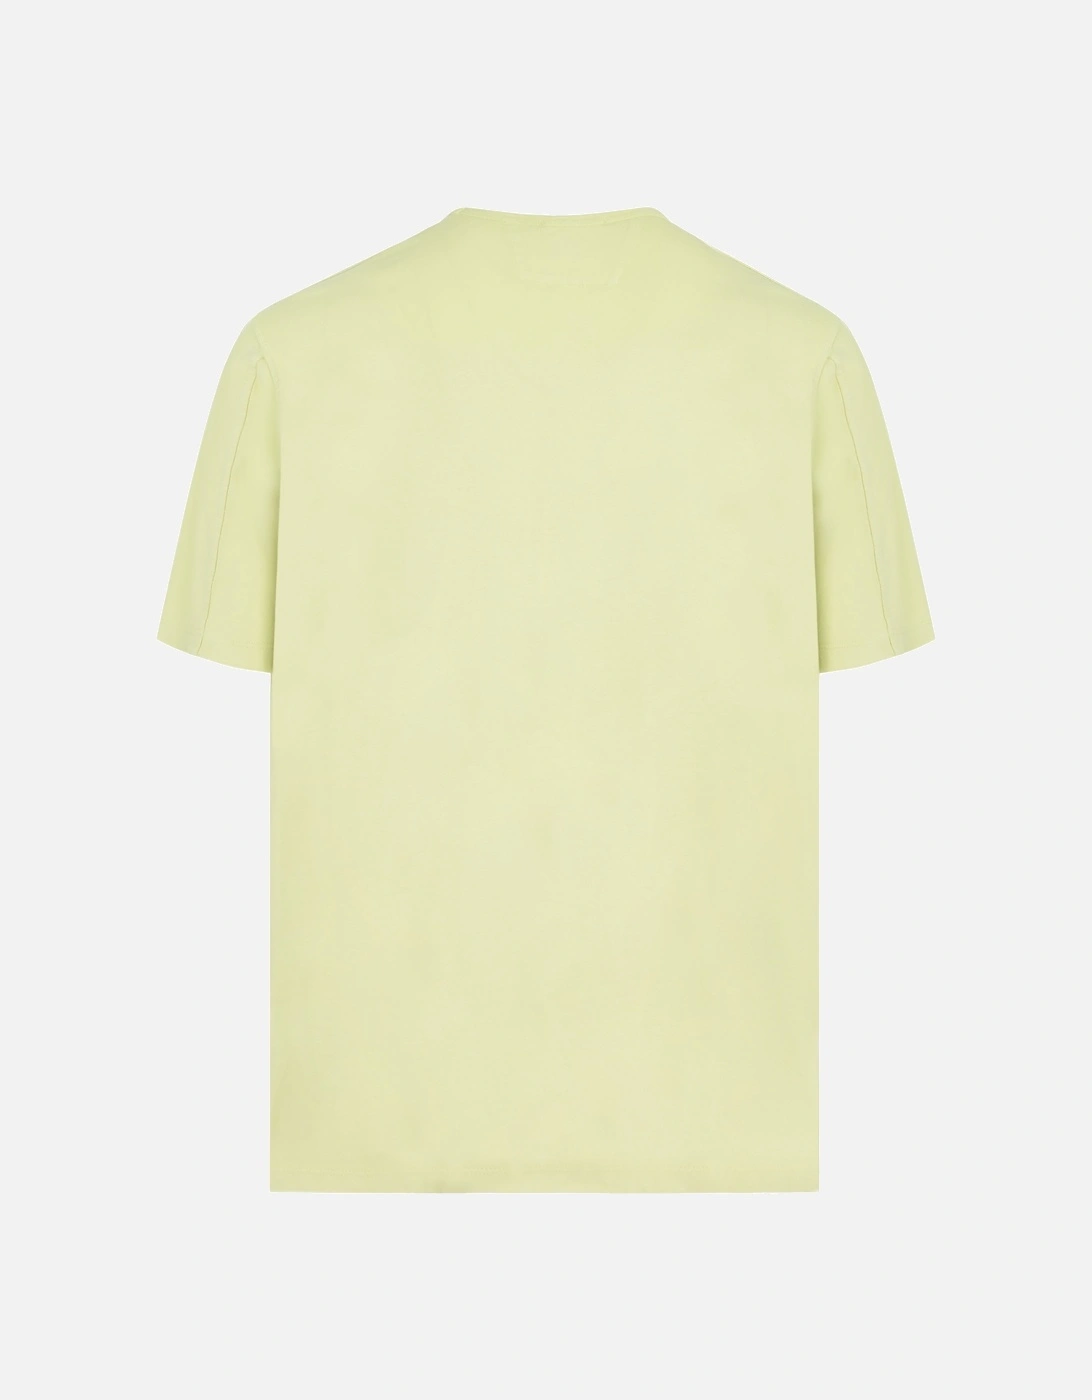 Resist Dyed Pocket T-shirt Yellow